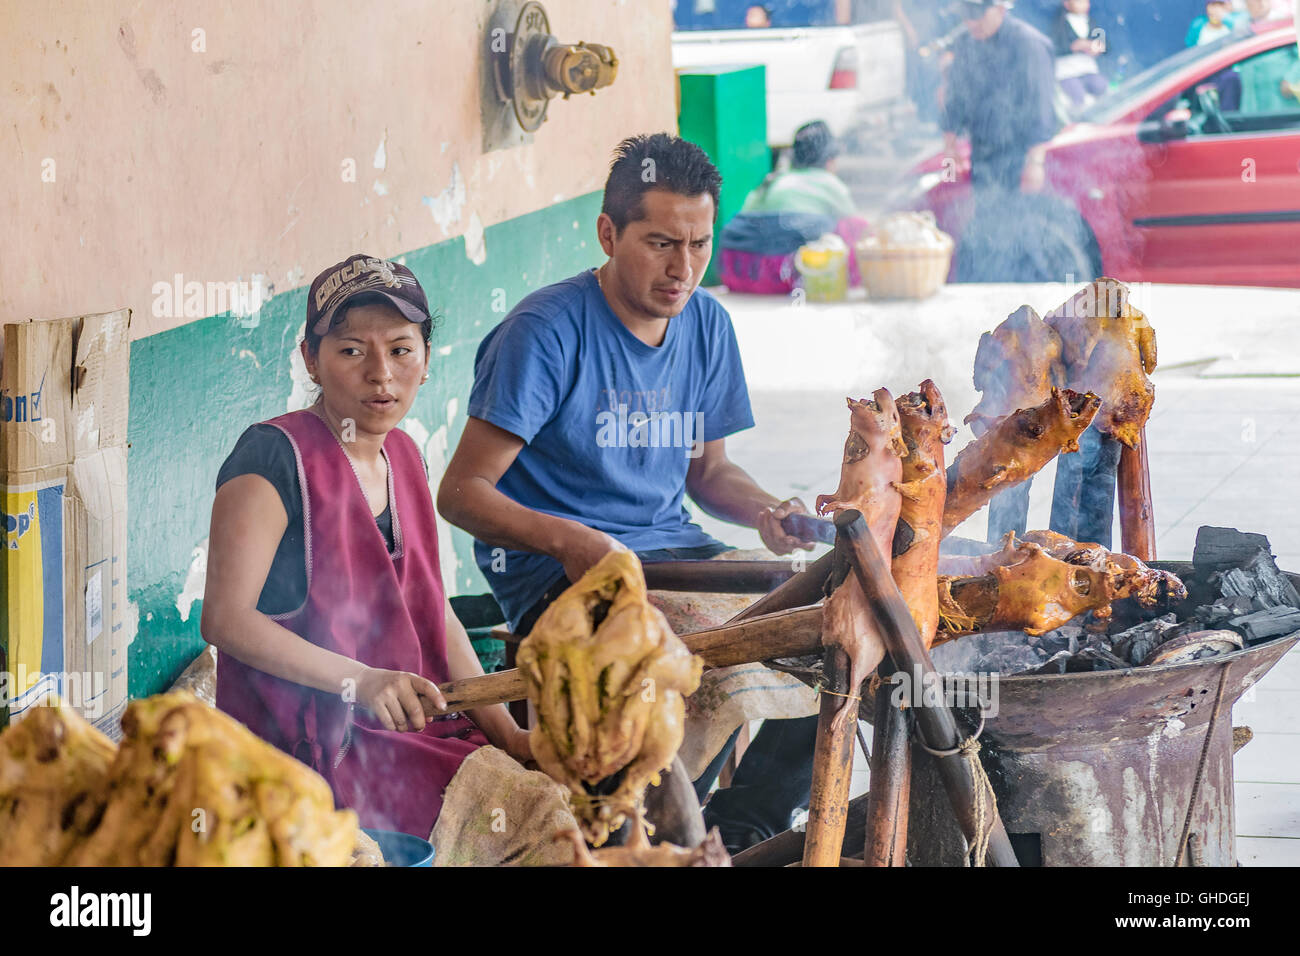 AZUAY, ECUADOR, OCTOBER - 2015 - Couple of chefs cooking traditional roasted cuy at street market in Azuay province, Ecuador. Stock Photo